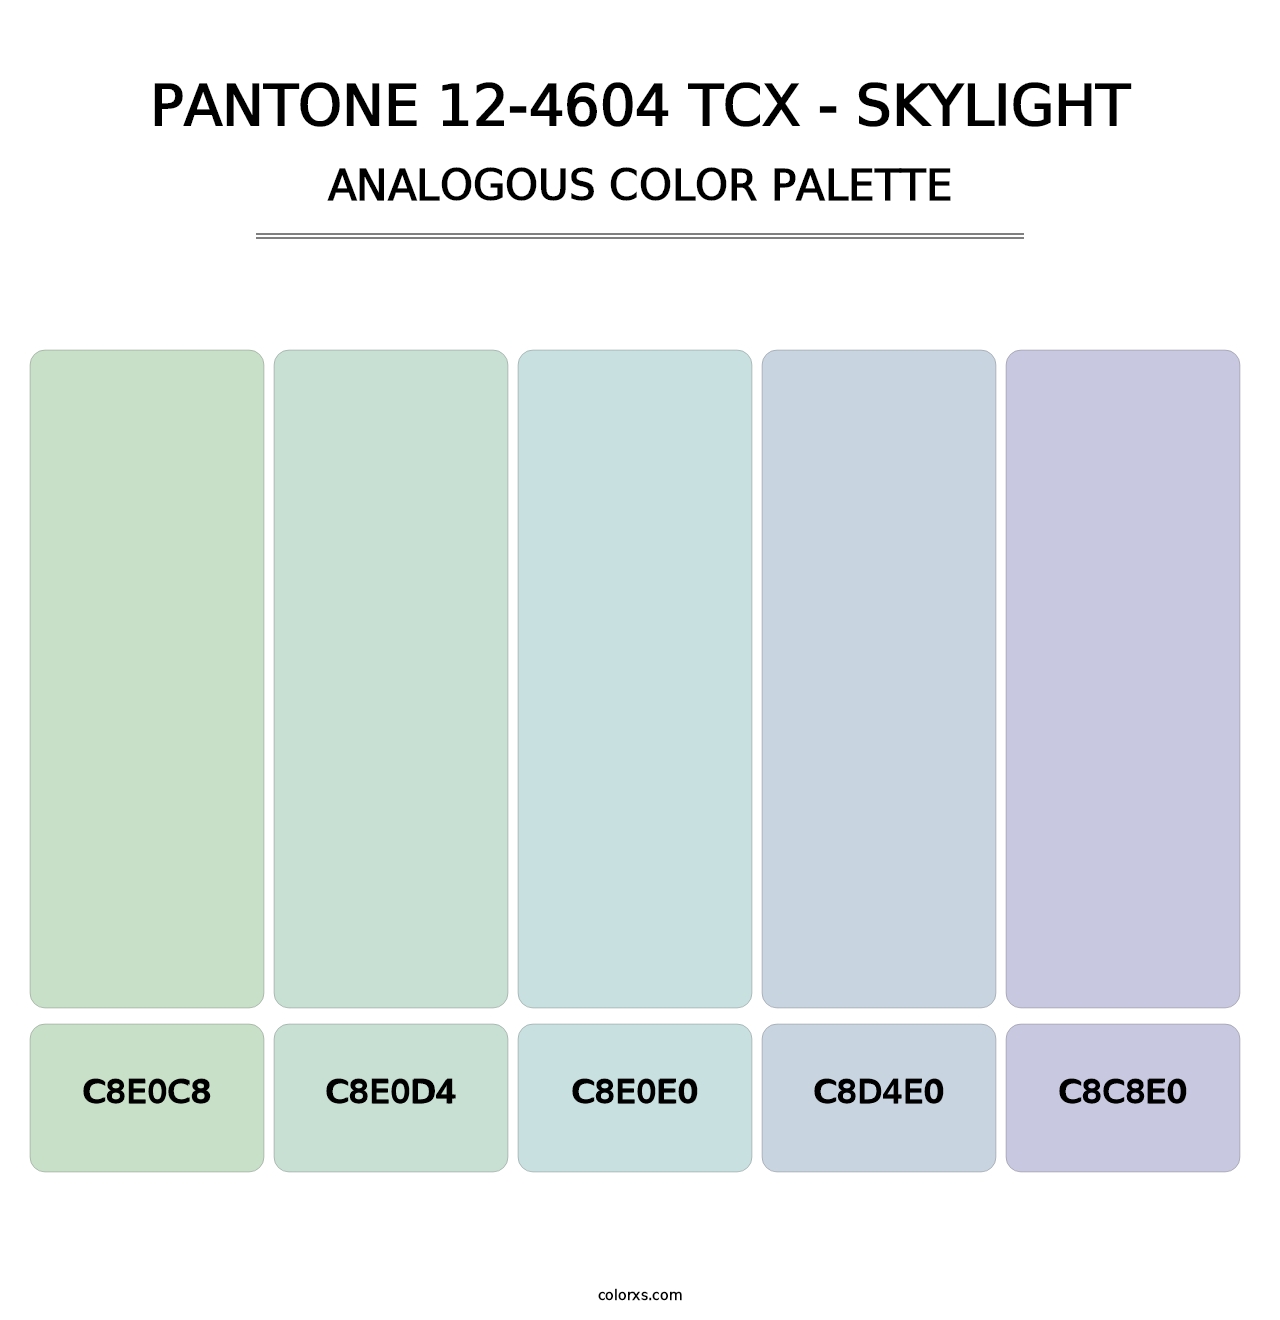 PANTONE 12-4604 TCX - Skylight - Analogous Color Palette